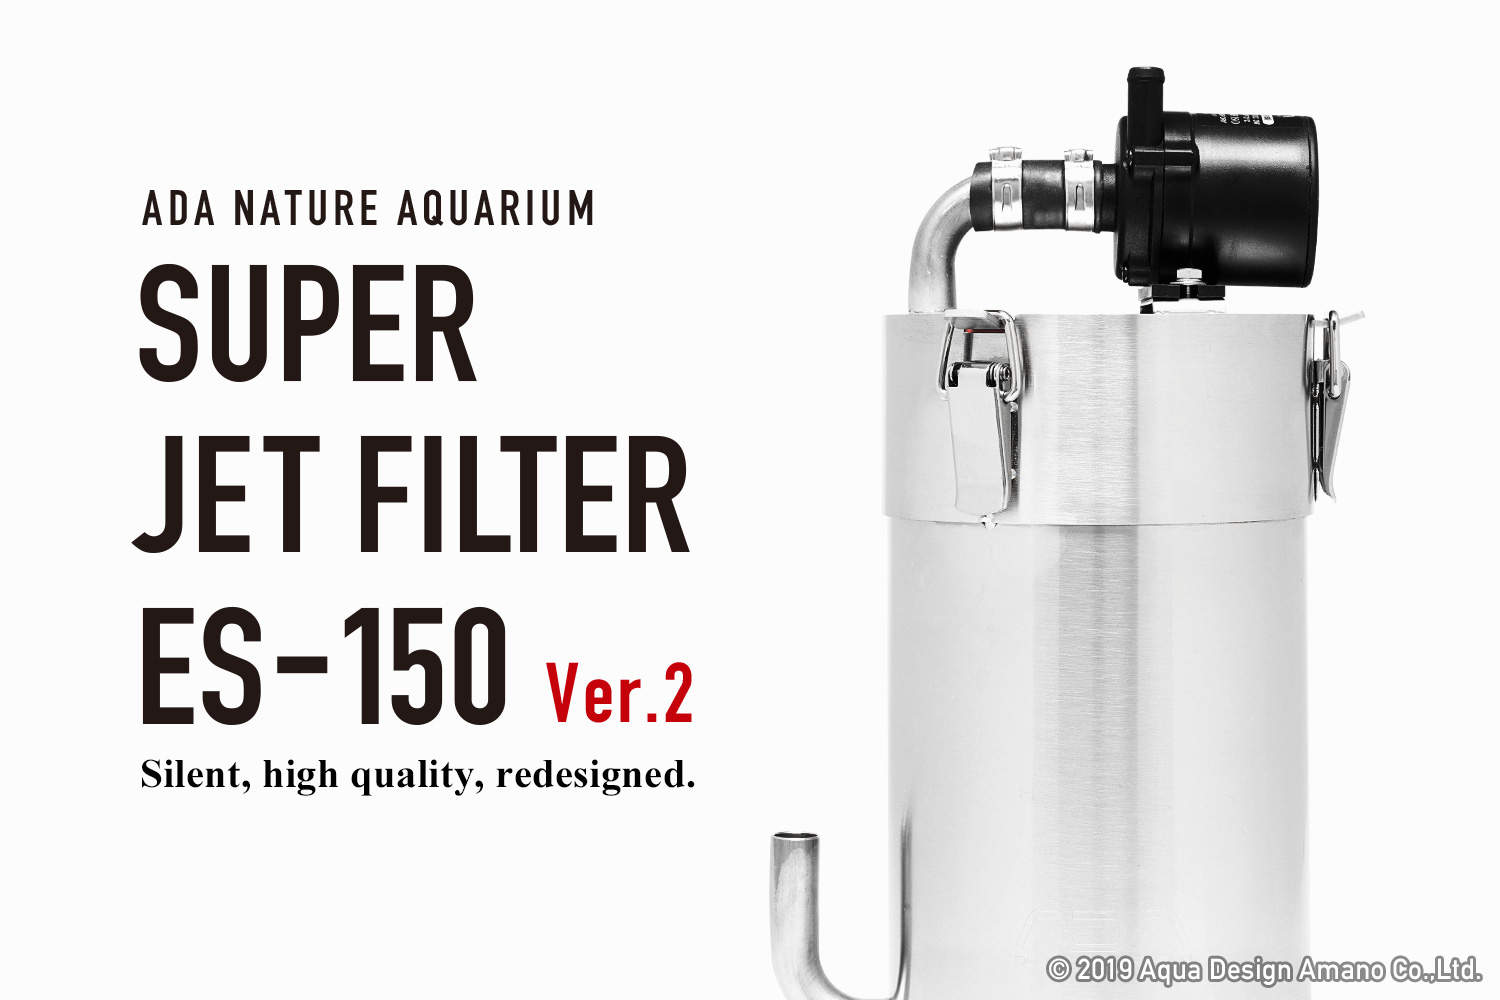 Super Jet Filter ES-150 Ver.2 is new released | ADA - NEWS RELEASE